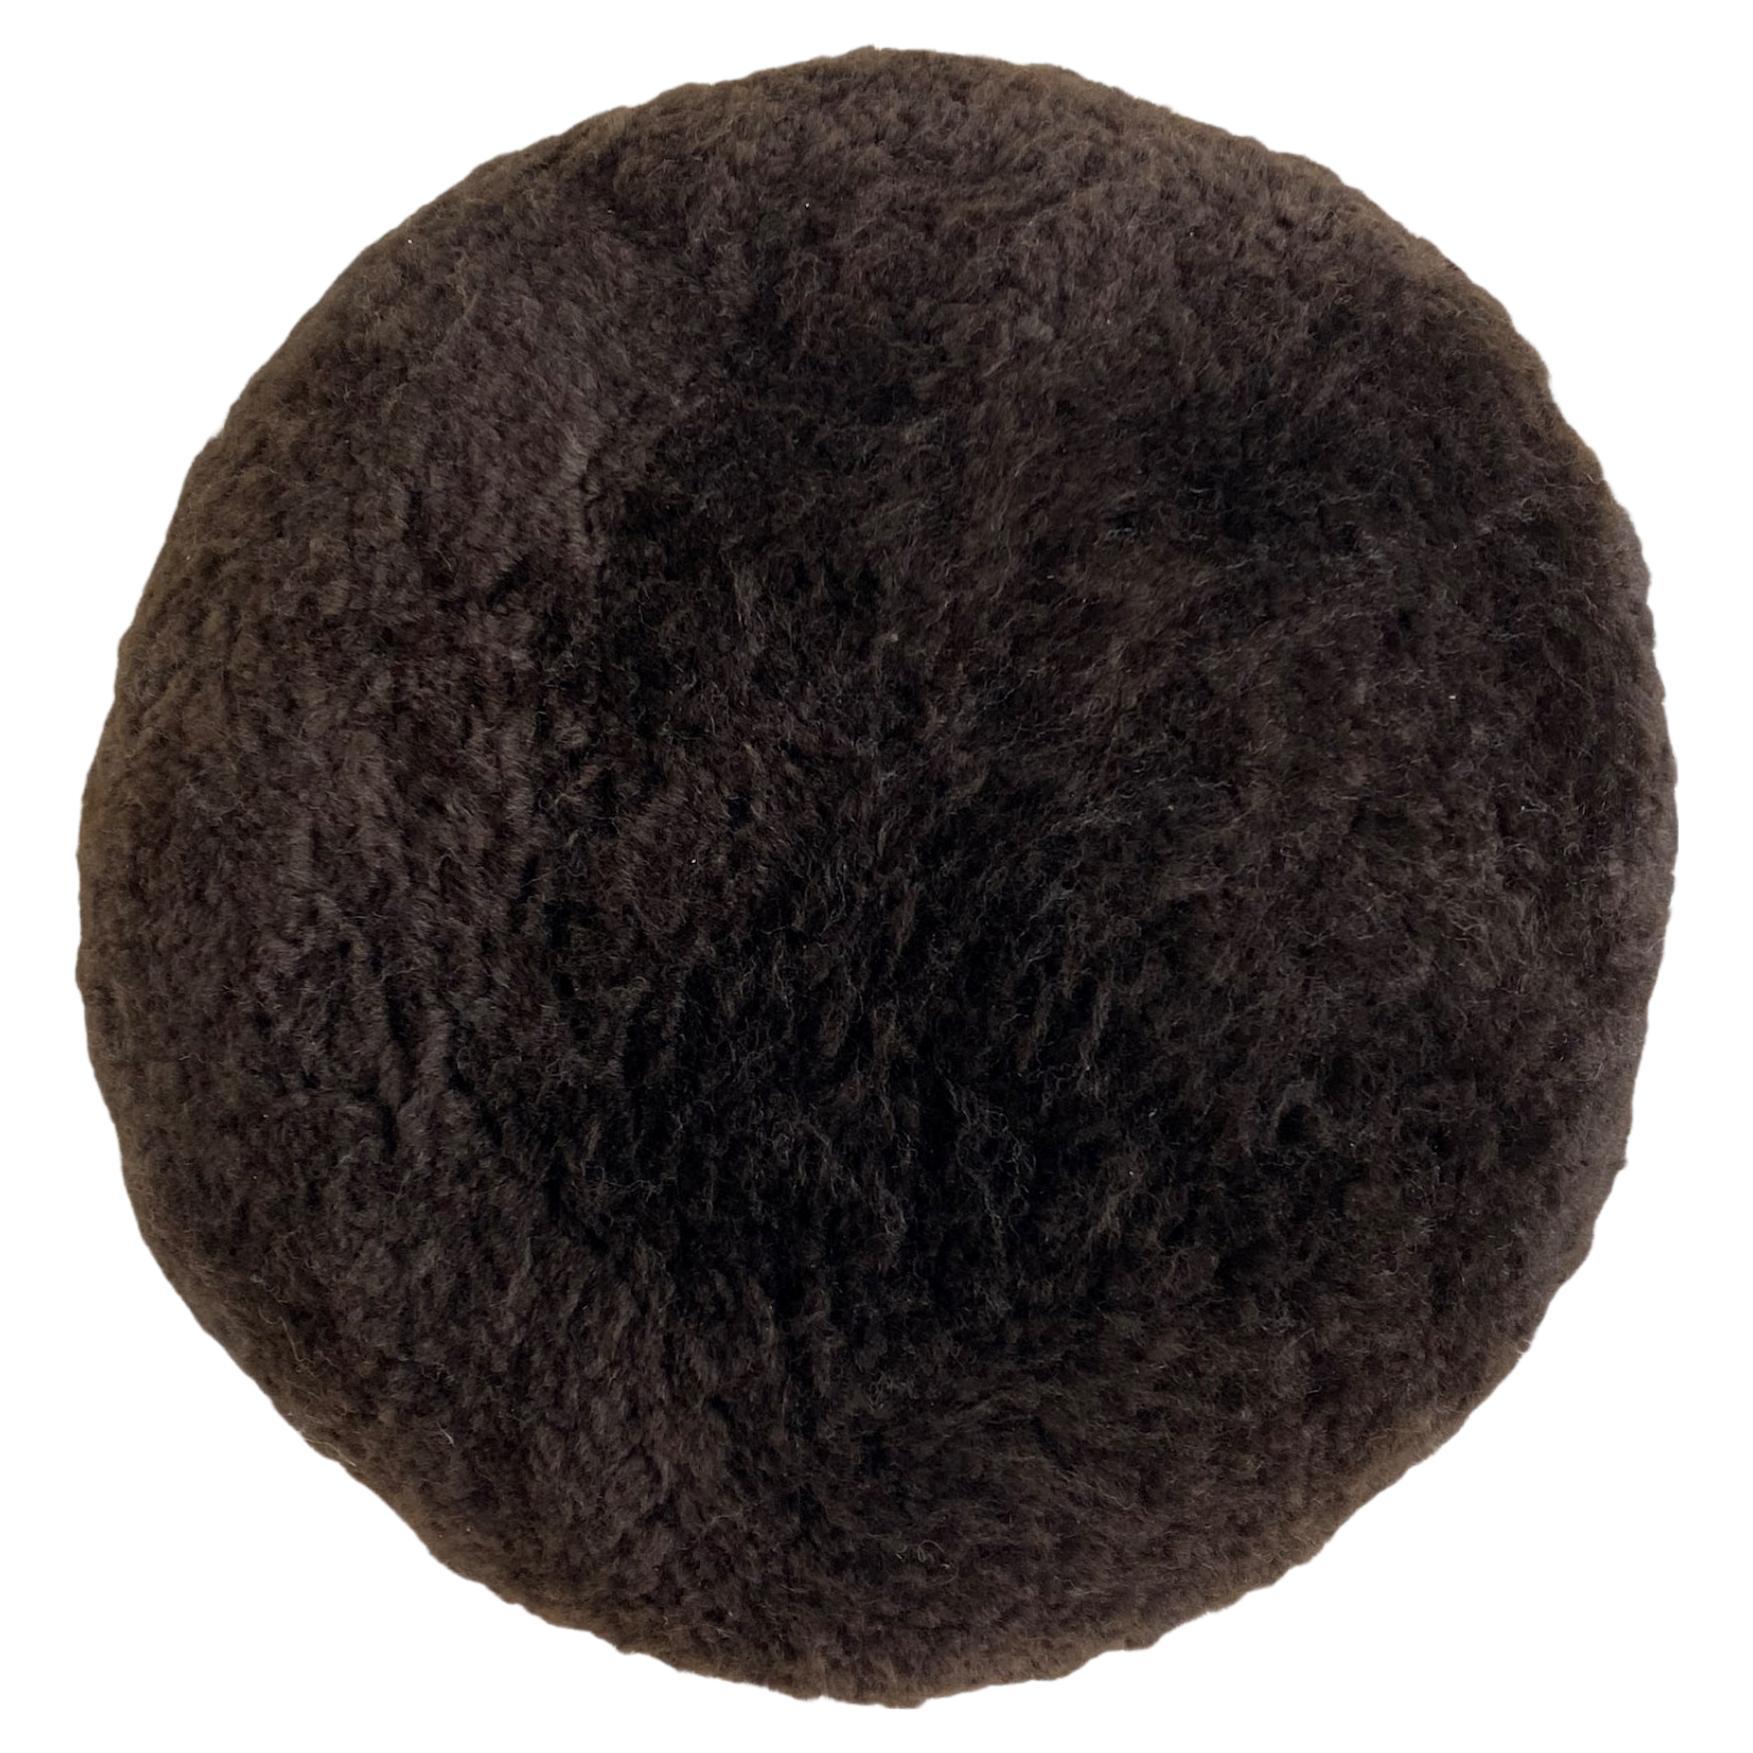 Round Pillow New Zealand Lambskin - 14" Brown Chestnut